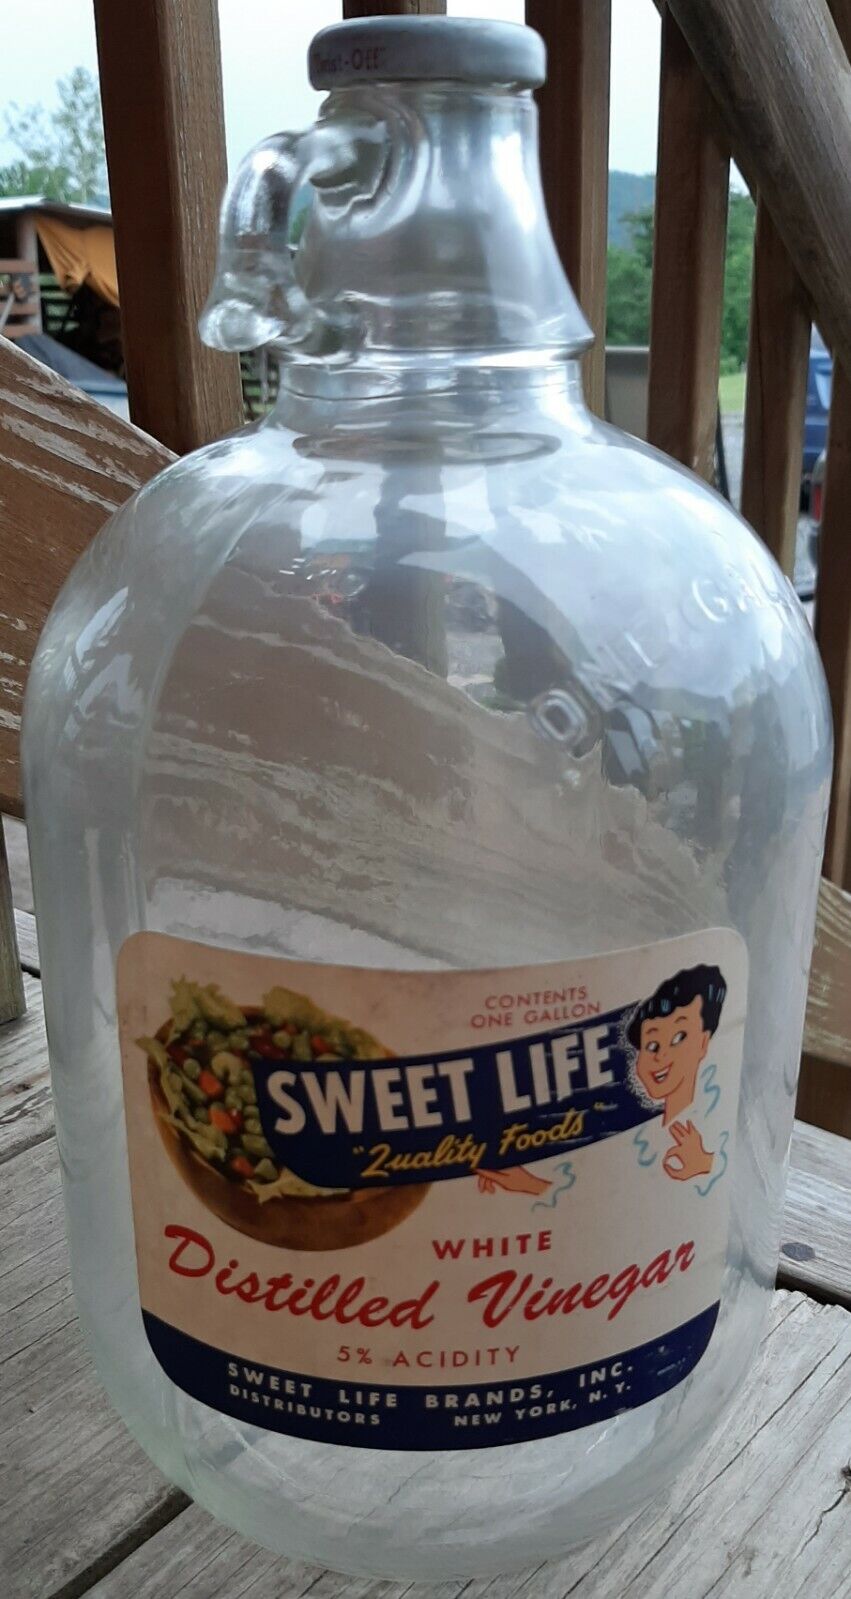 Vintage Sweet Life White Distilled Vinegar 1 gallon jug bottle, New York N.Y.